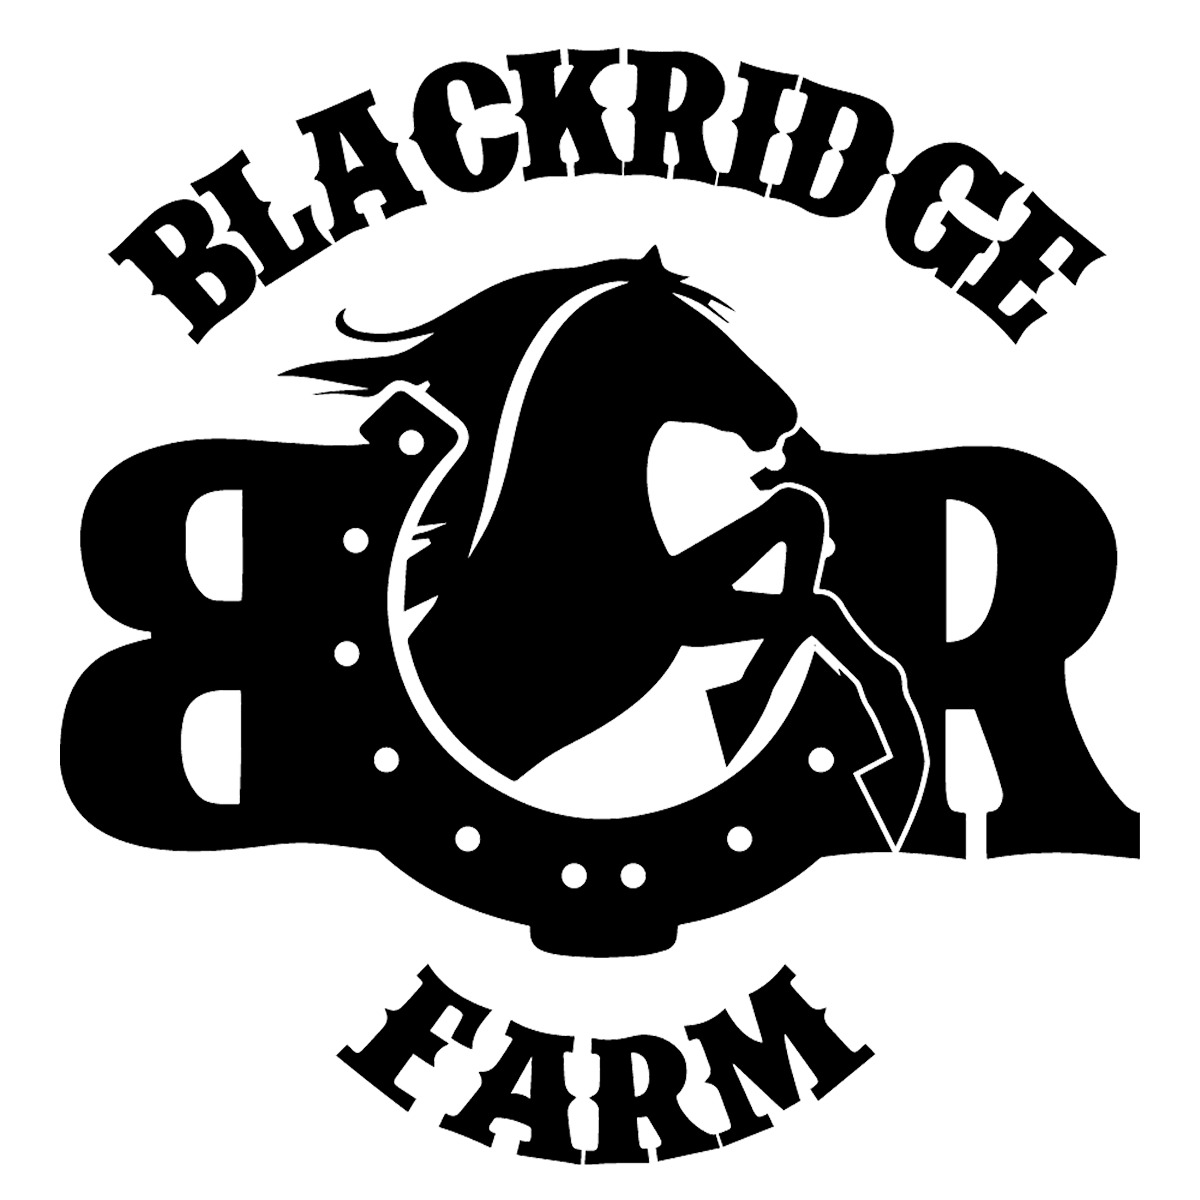 Blackridge Farm Team Store